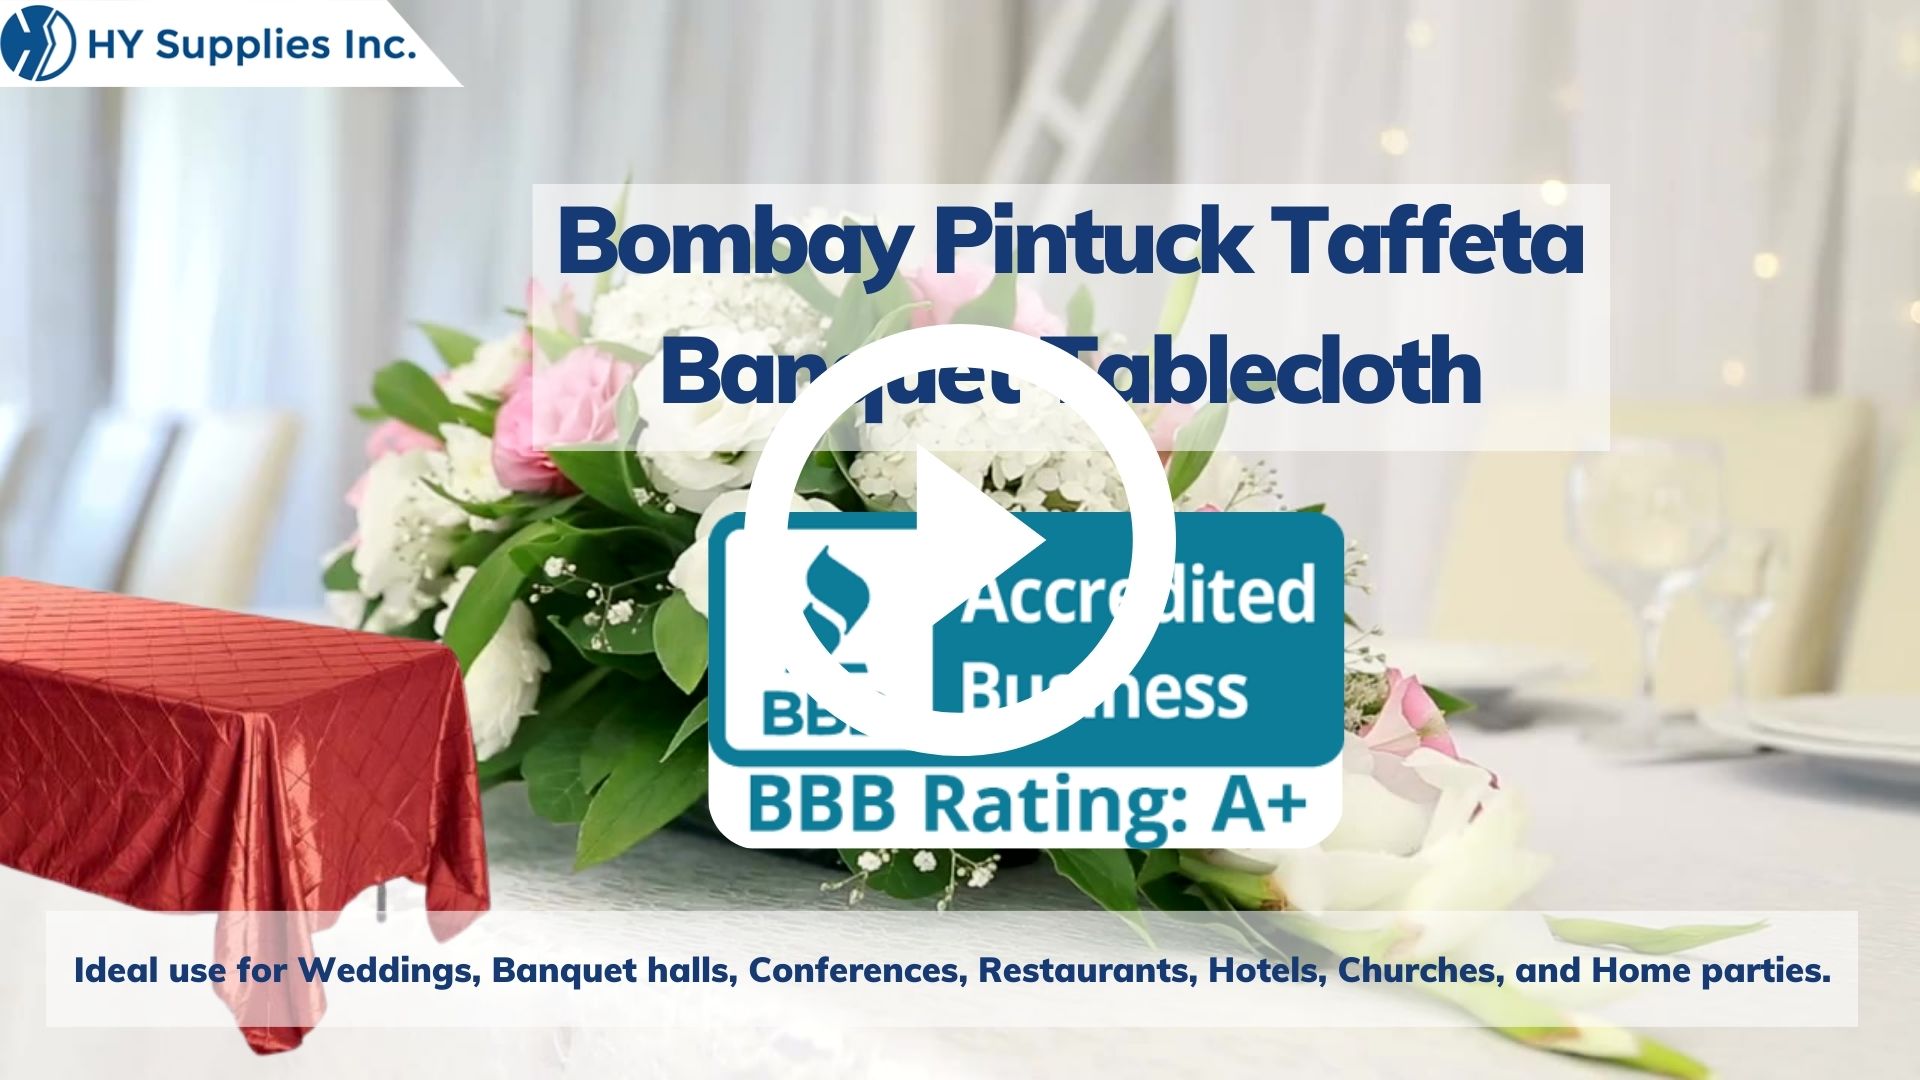 Bombay Pintuck Taffeta Banquet Tablecloth